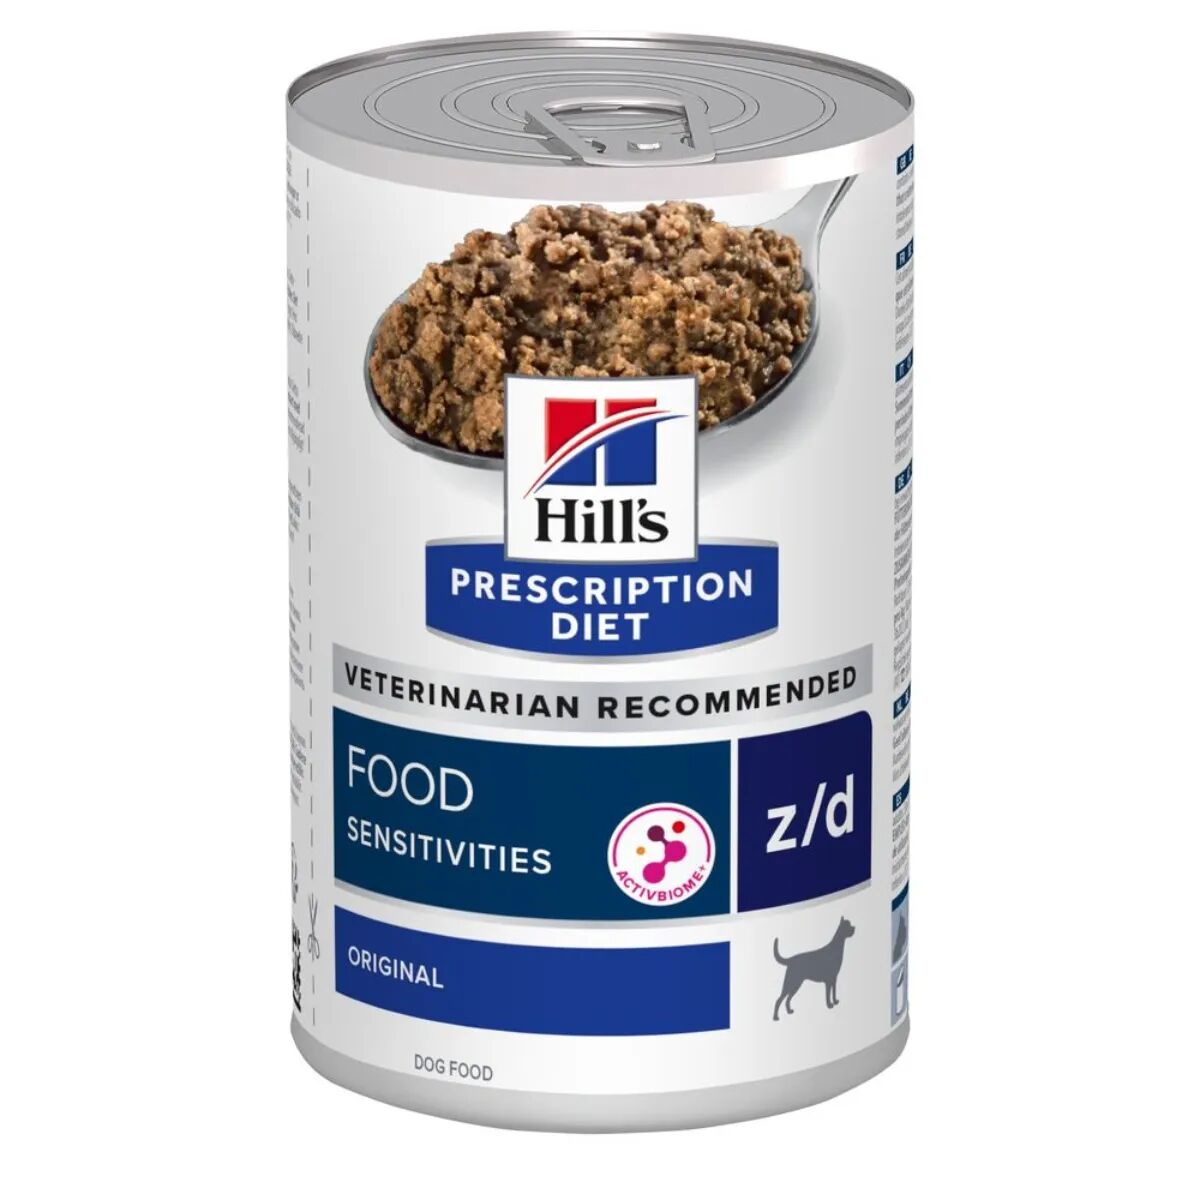 HILLS Hill's Prescription Diet z/d Food Sensitivities Alimento Umido per Cani 370G